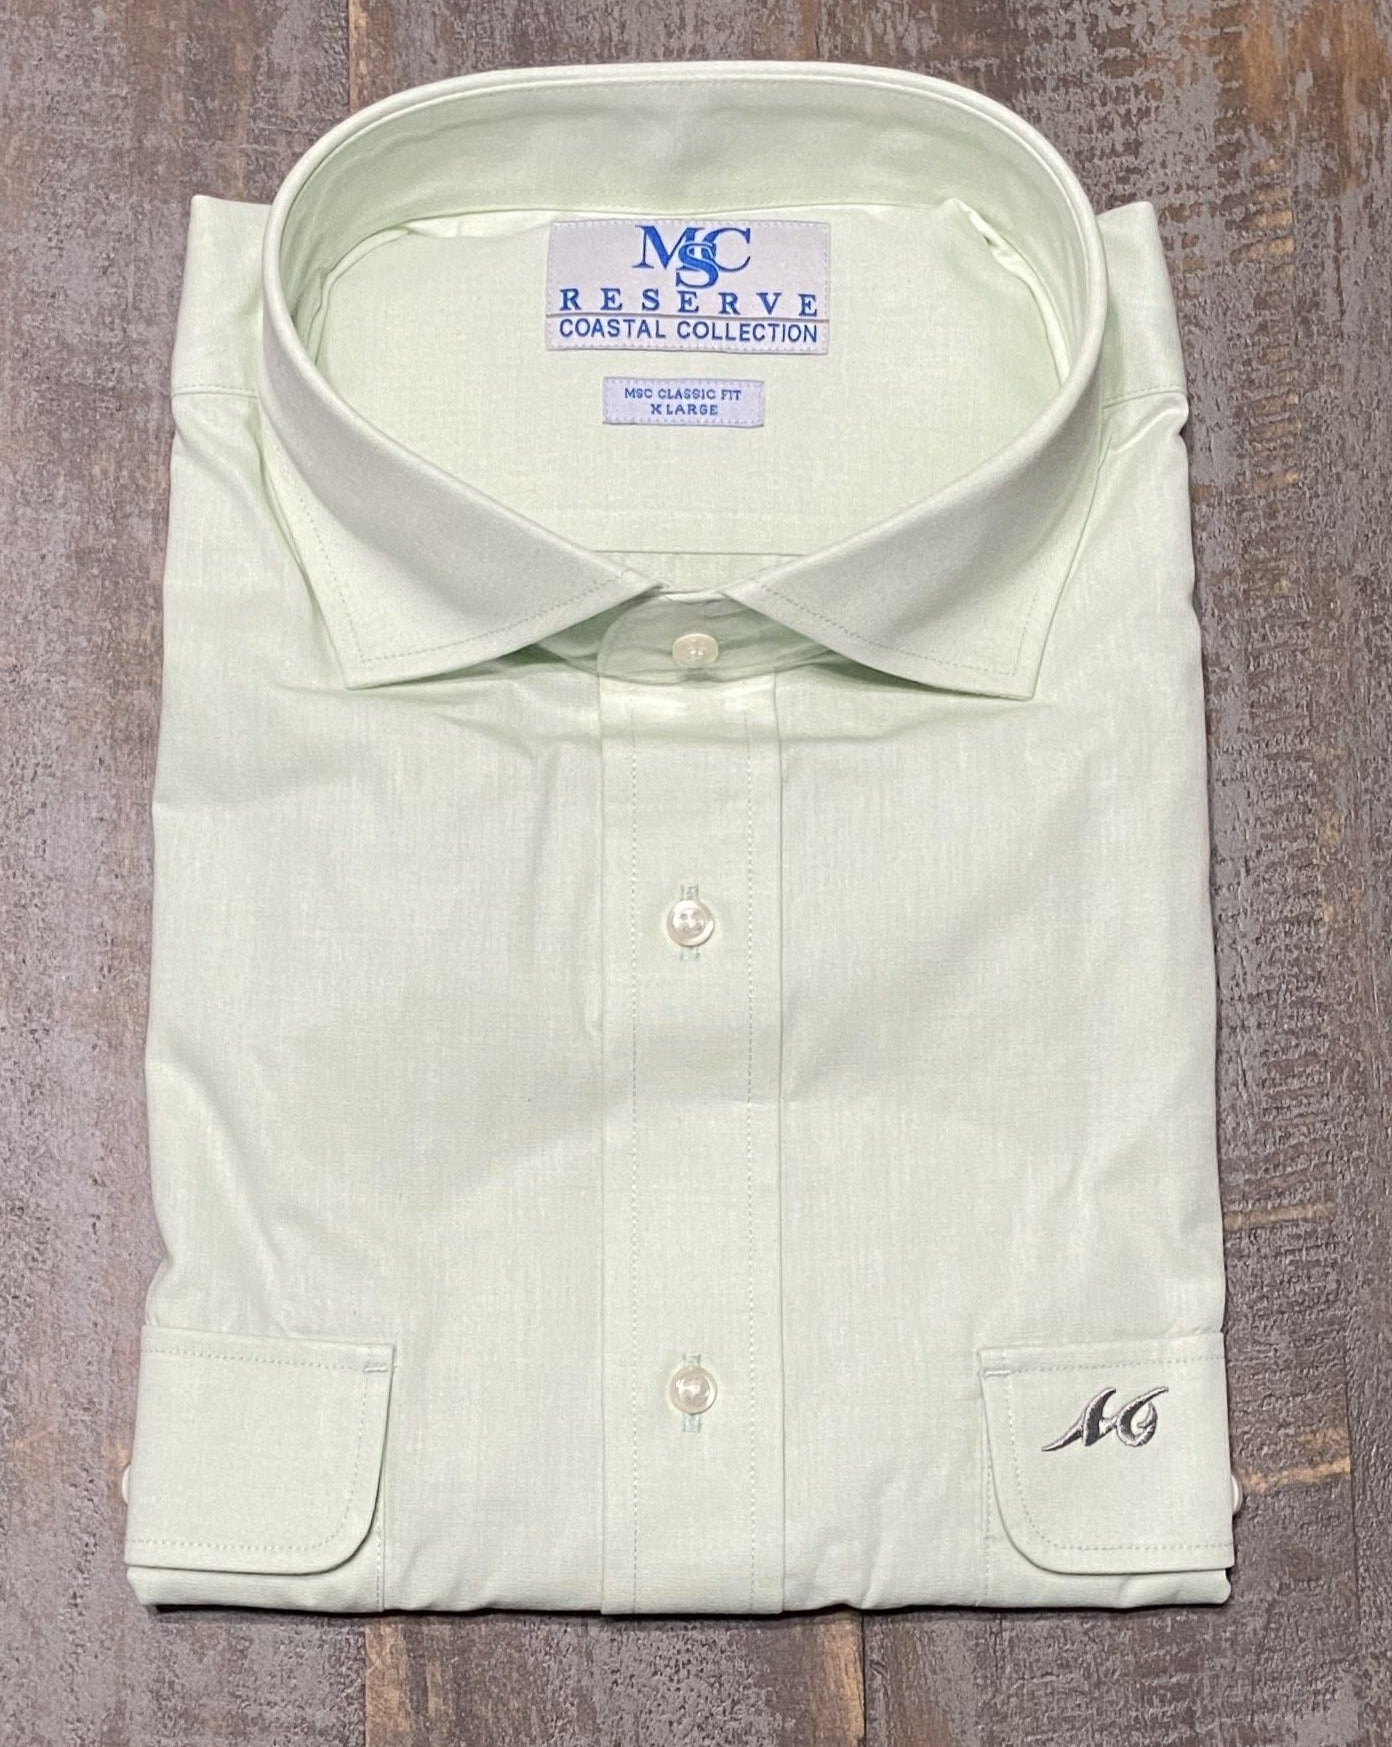 MSC Reserve Coastal Linen - Mojo Sportswear Company